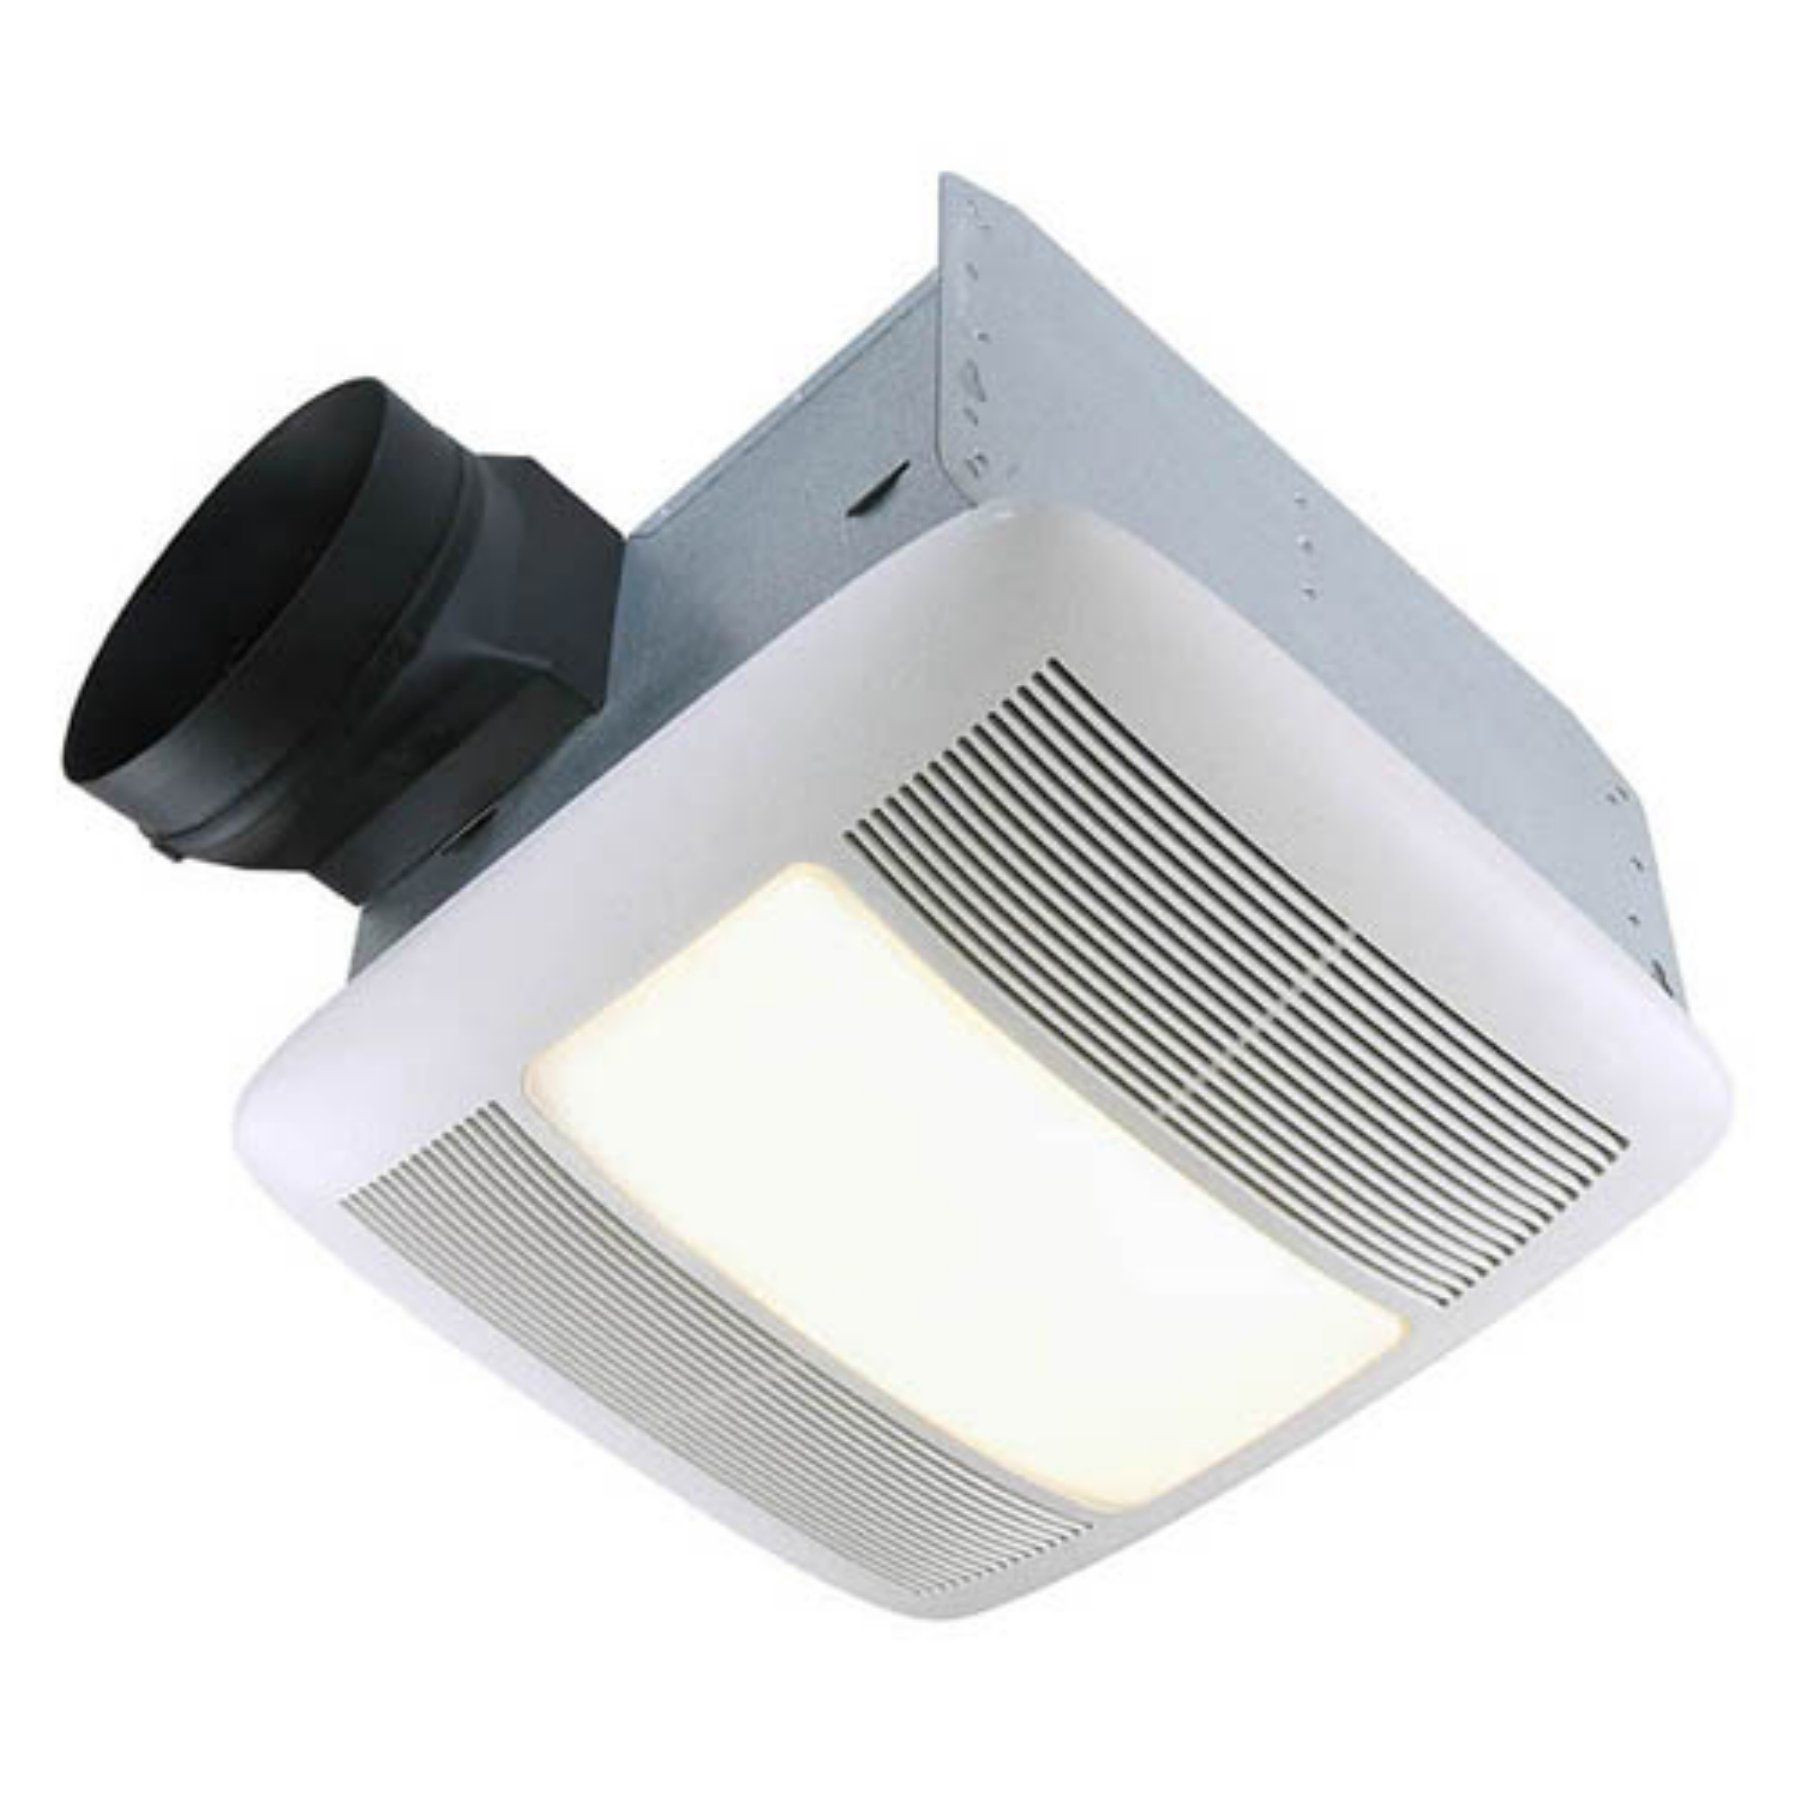 Panasonic Bathroom Fan With Light
 Broan Nutone Qtxen150Flt Ultra Silent Bathroom Fan Light